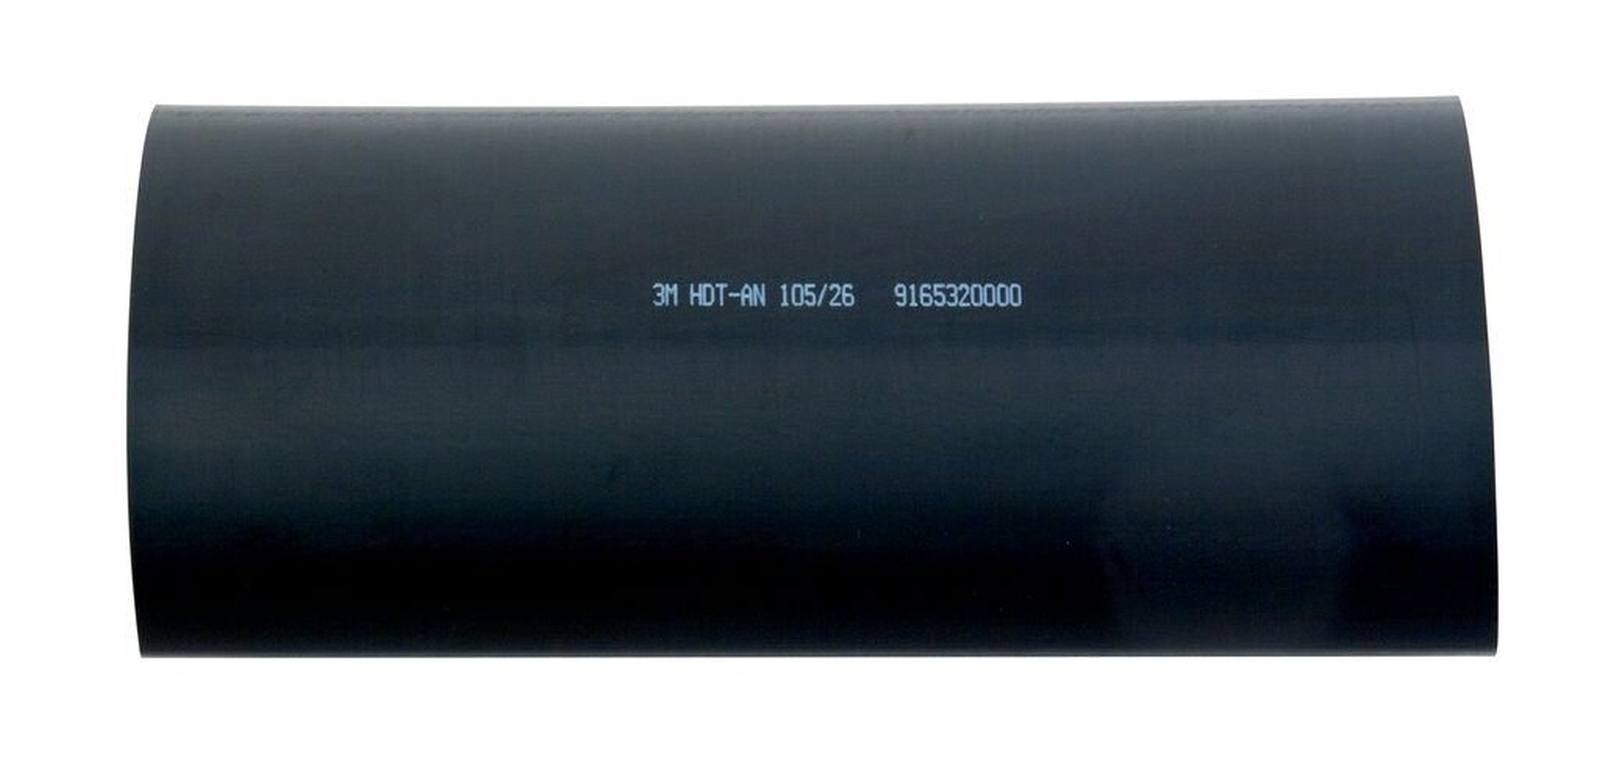 3M HDT-AN Tubo termorretráctil de pared gruesa con adhesivo, negro, 105/26 mm, 1 m